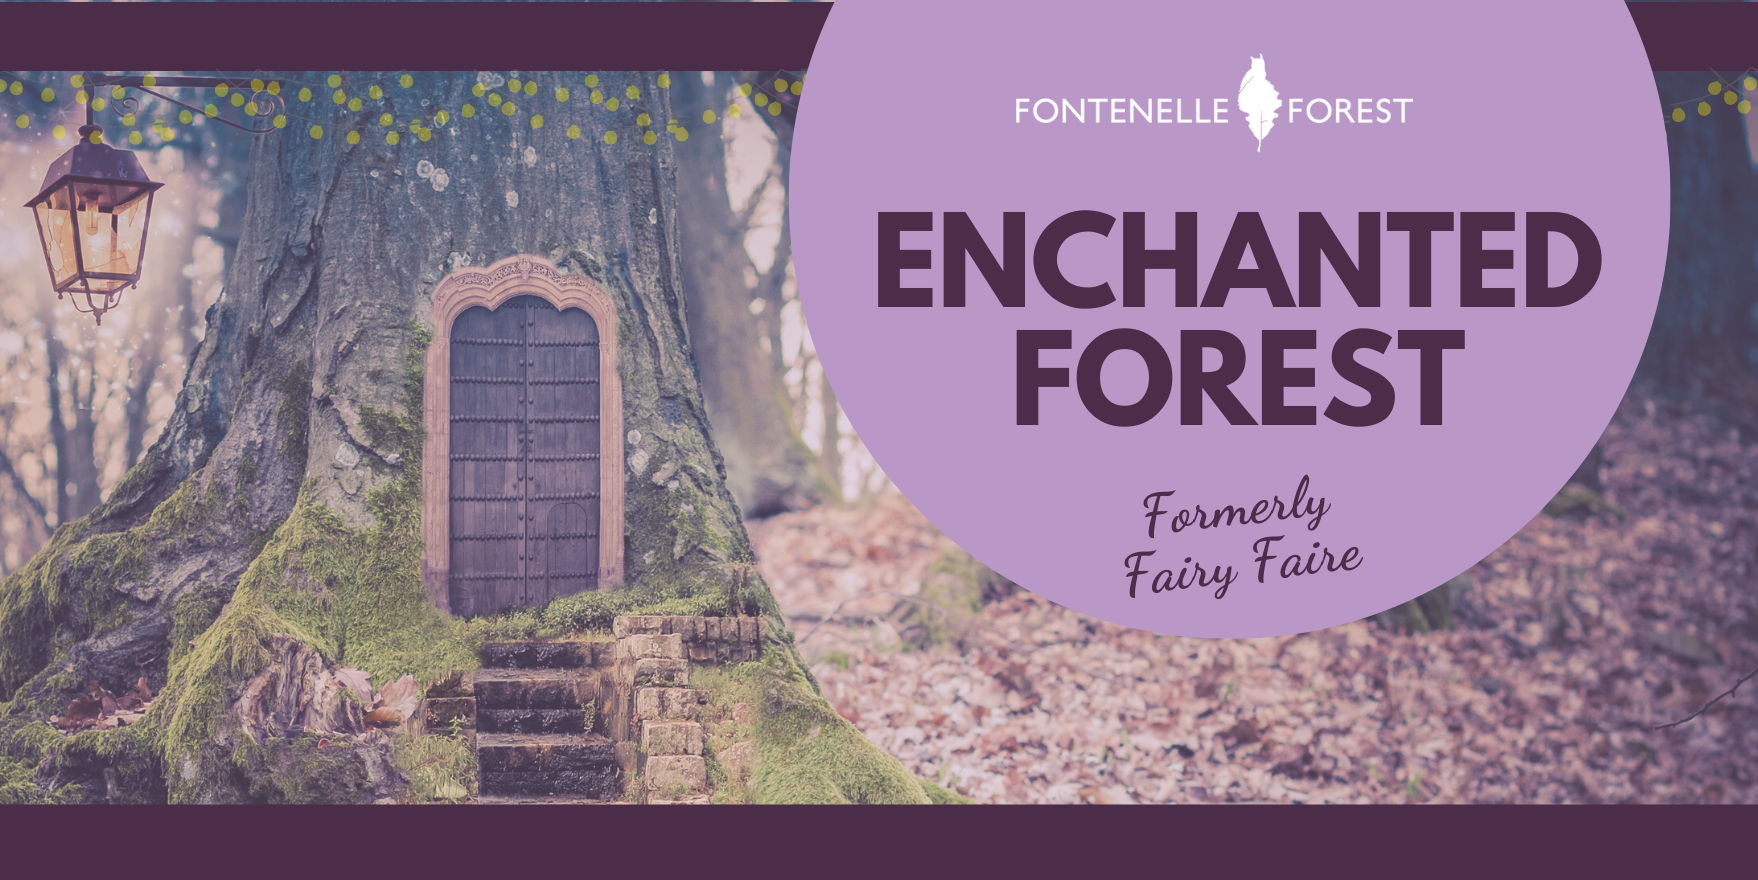 Enchanted Forest promotional image